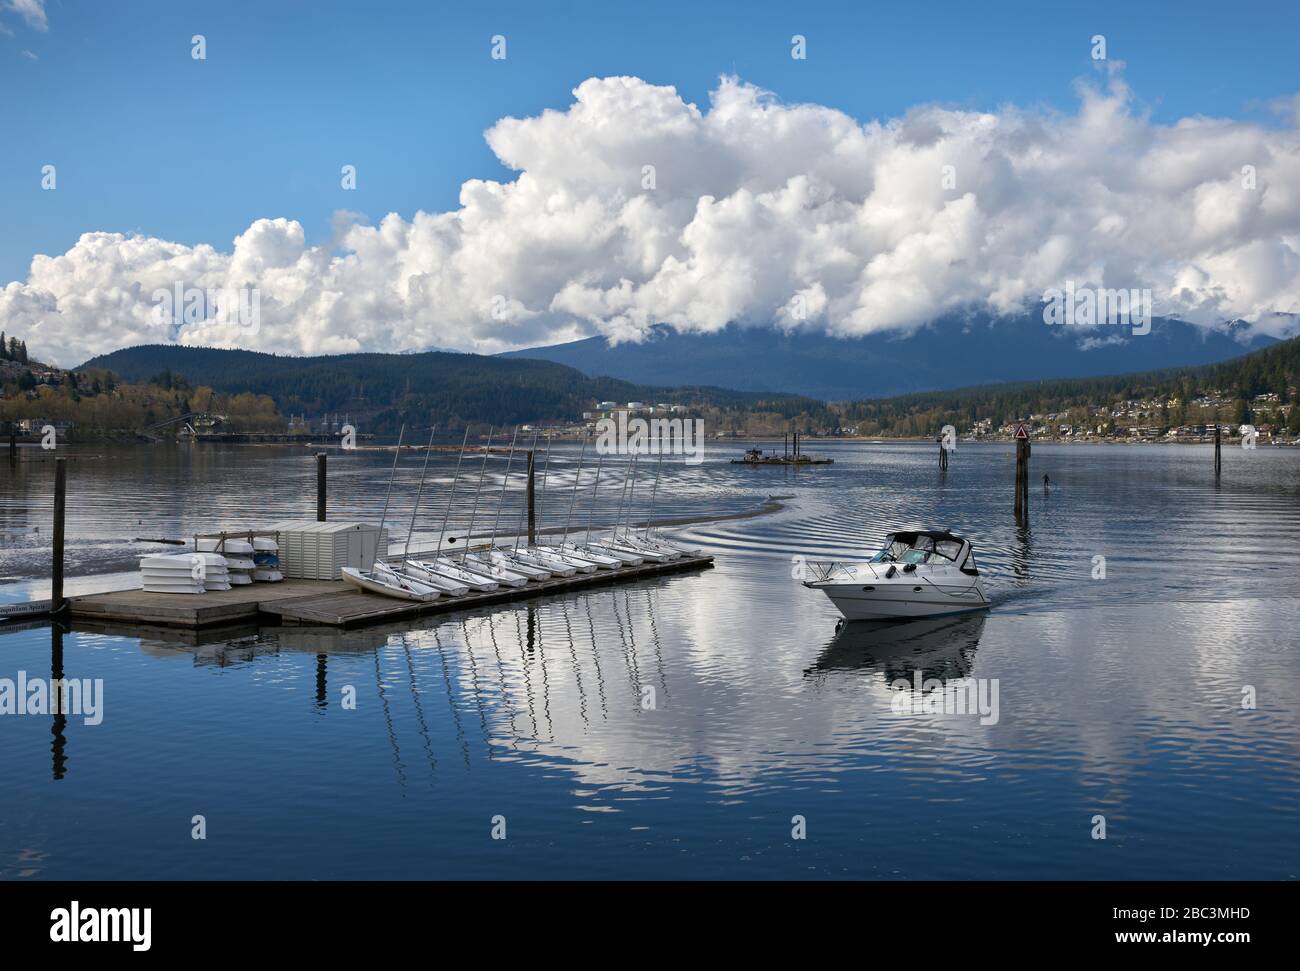 Port Moody Rocky Point Park. Sailboats on a wharf in Rocky Point Park, Port Moody, British Columbia. Stock Photo